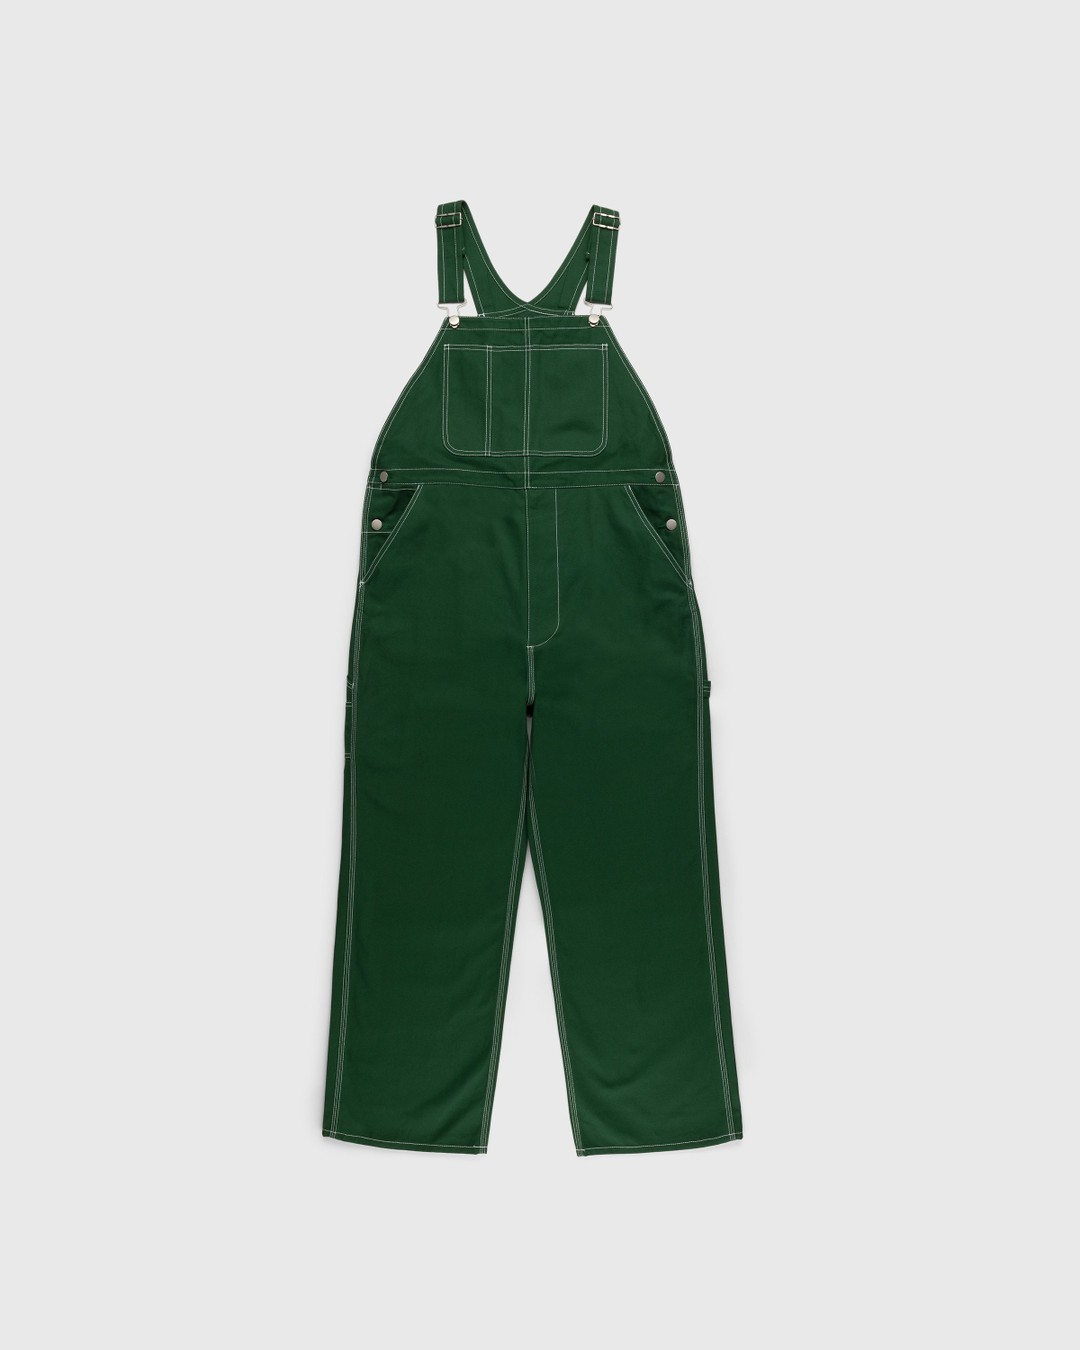 RUF x Highsnobiety – Cotton Overalls Green - Pants - Green - Image 2